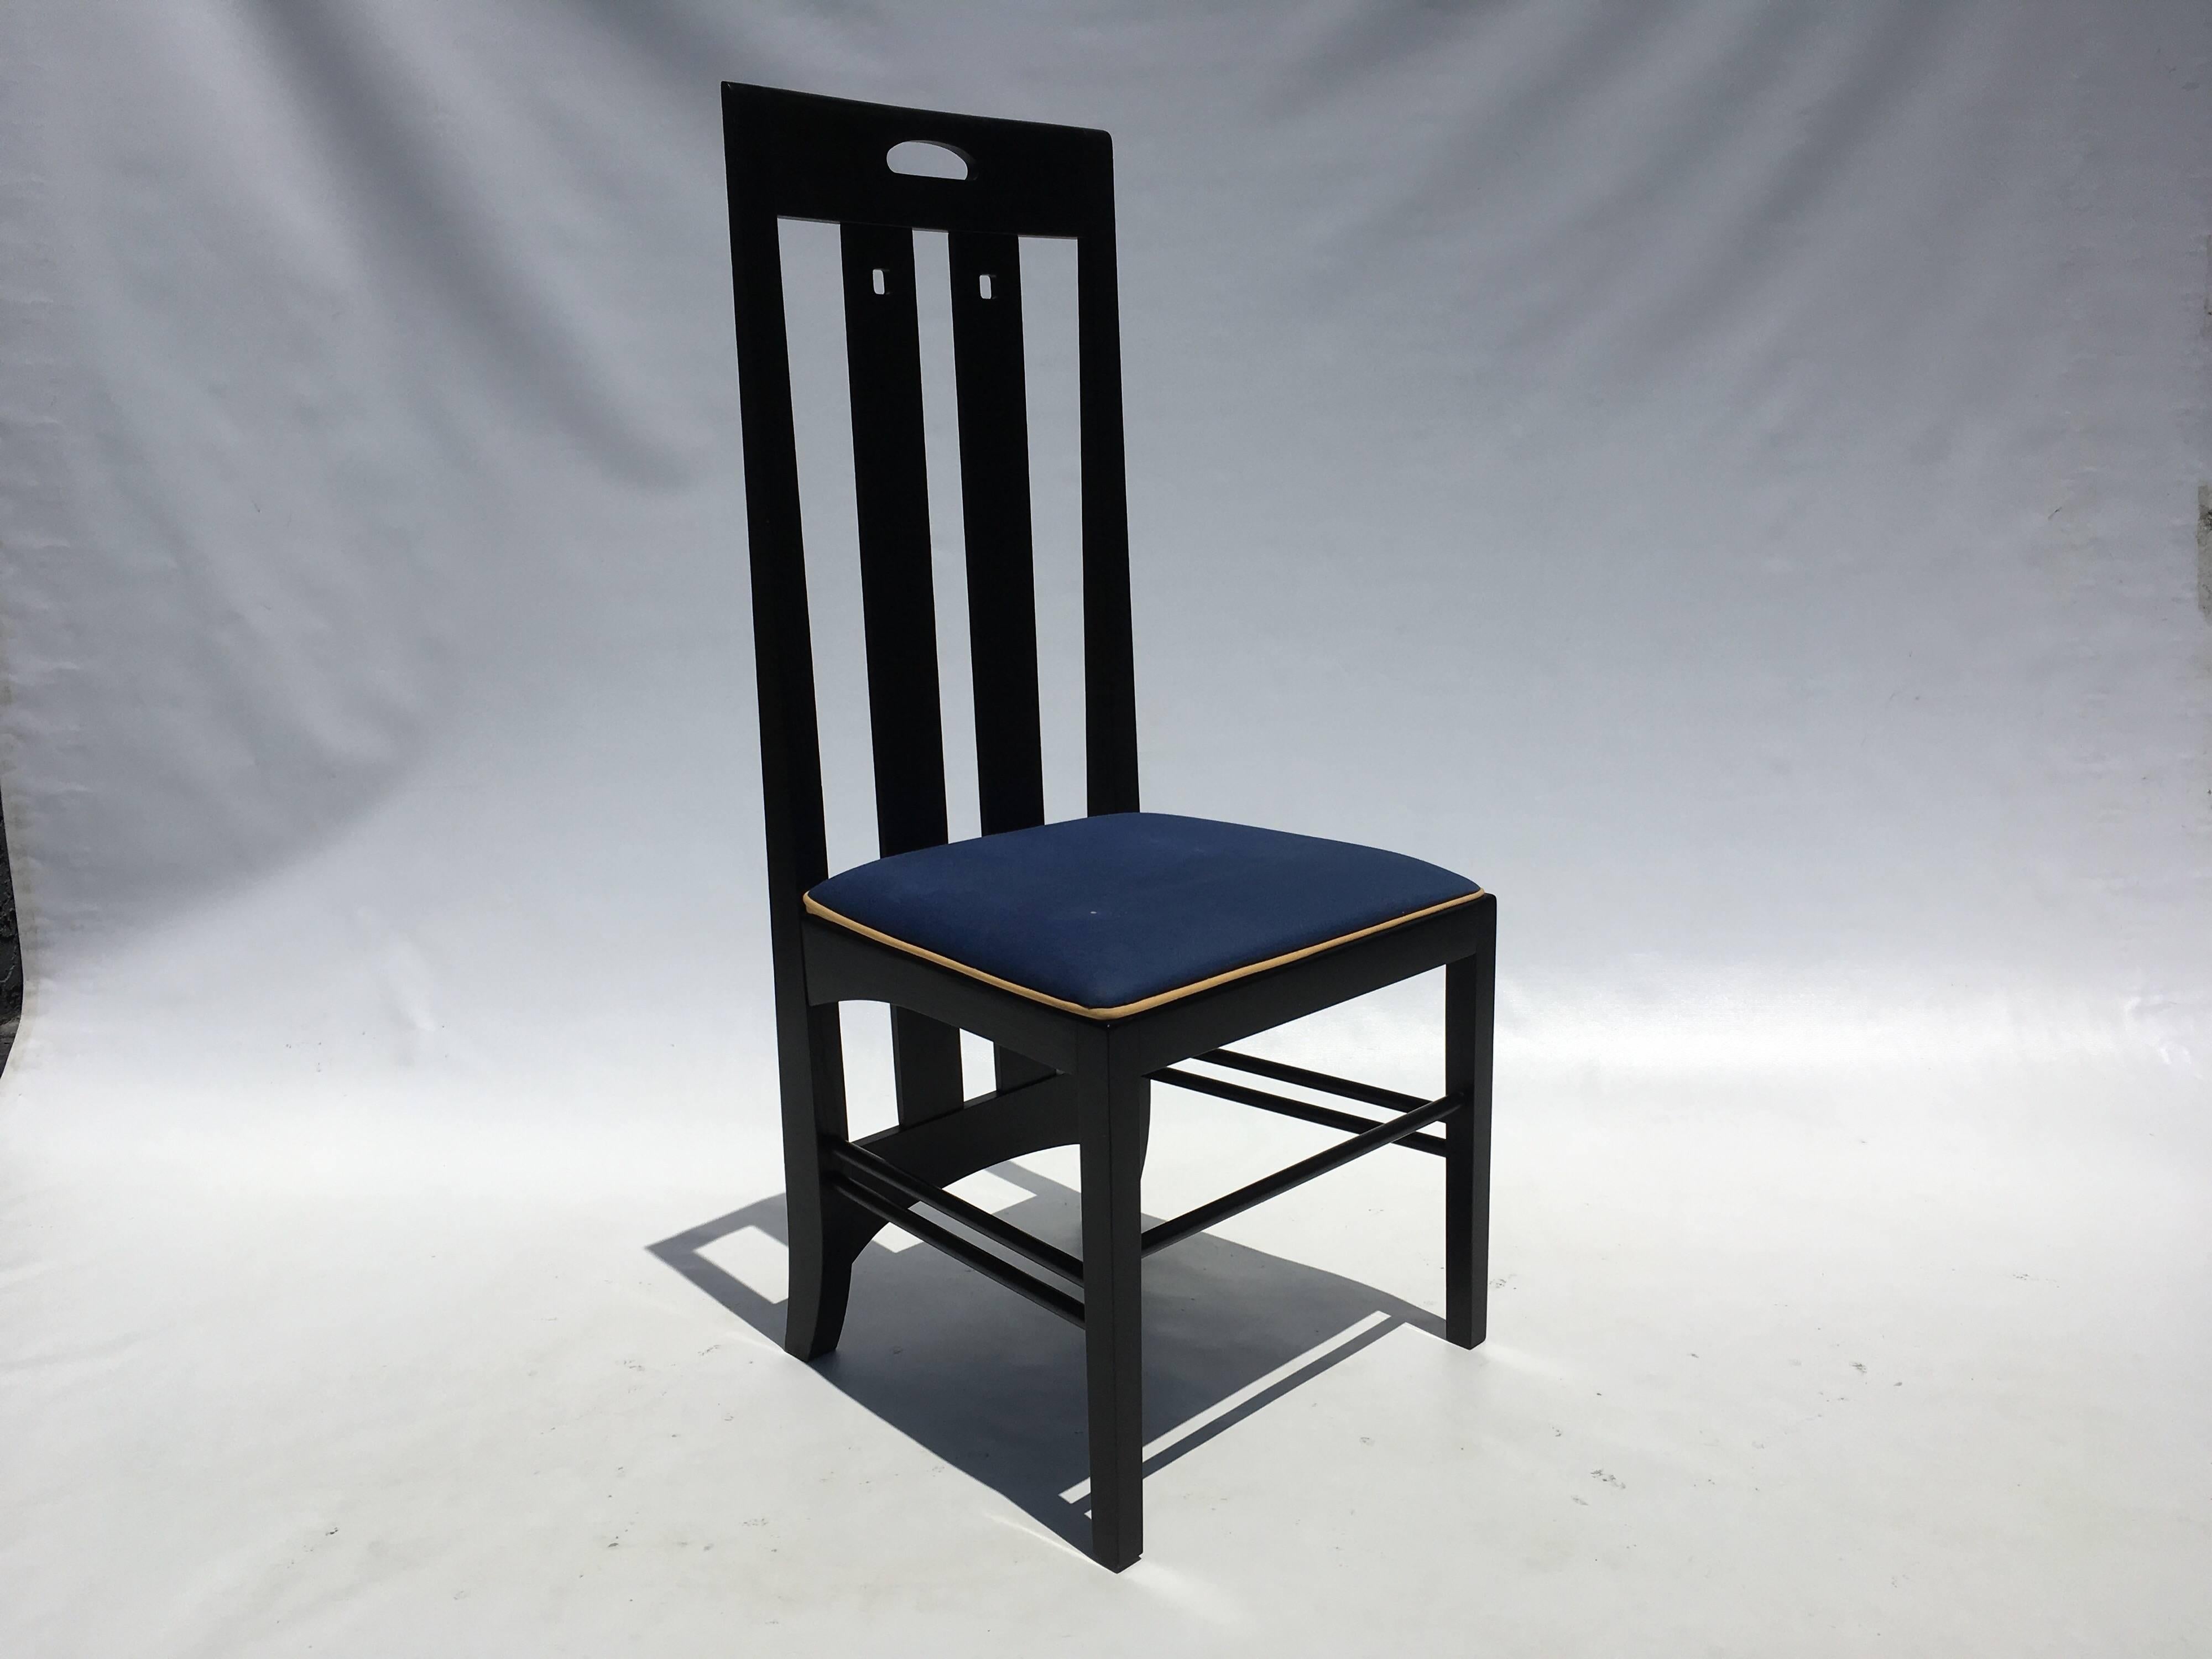 Fabric Six Charles Rennie Mackintosh Chairs by Cassina